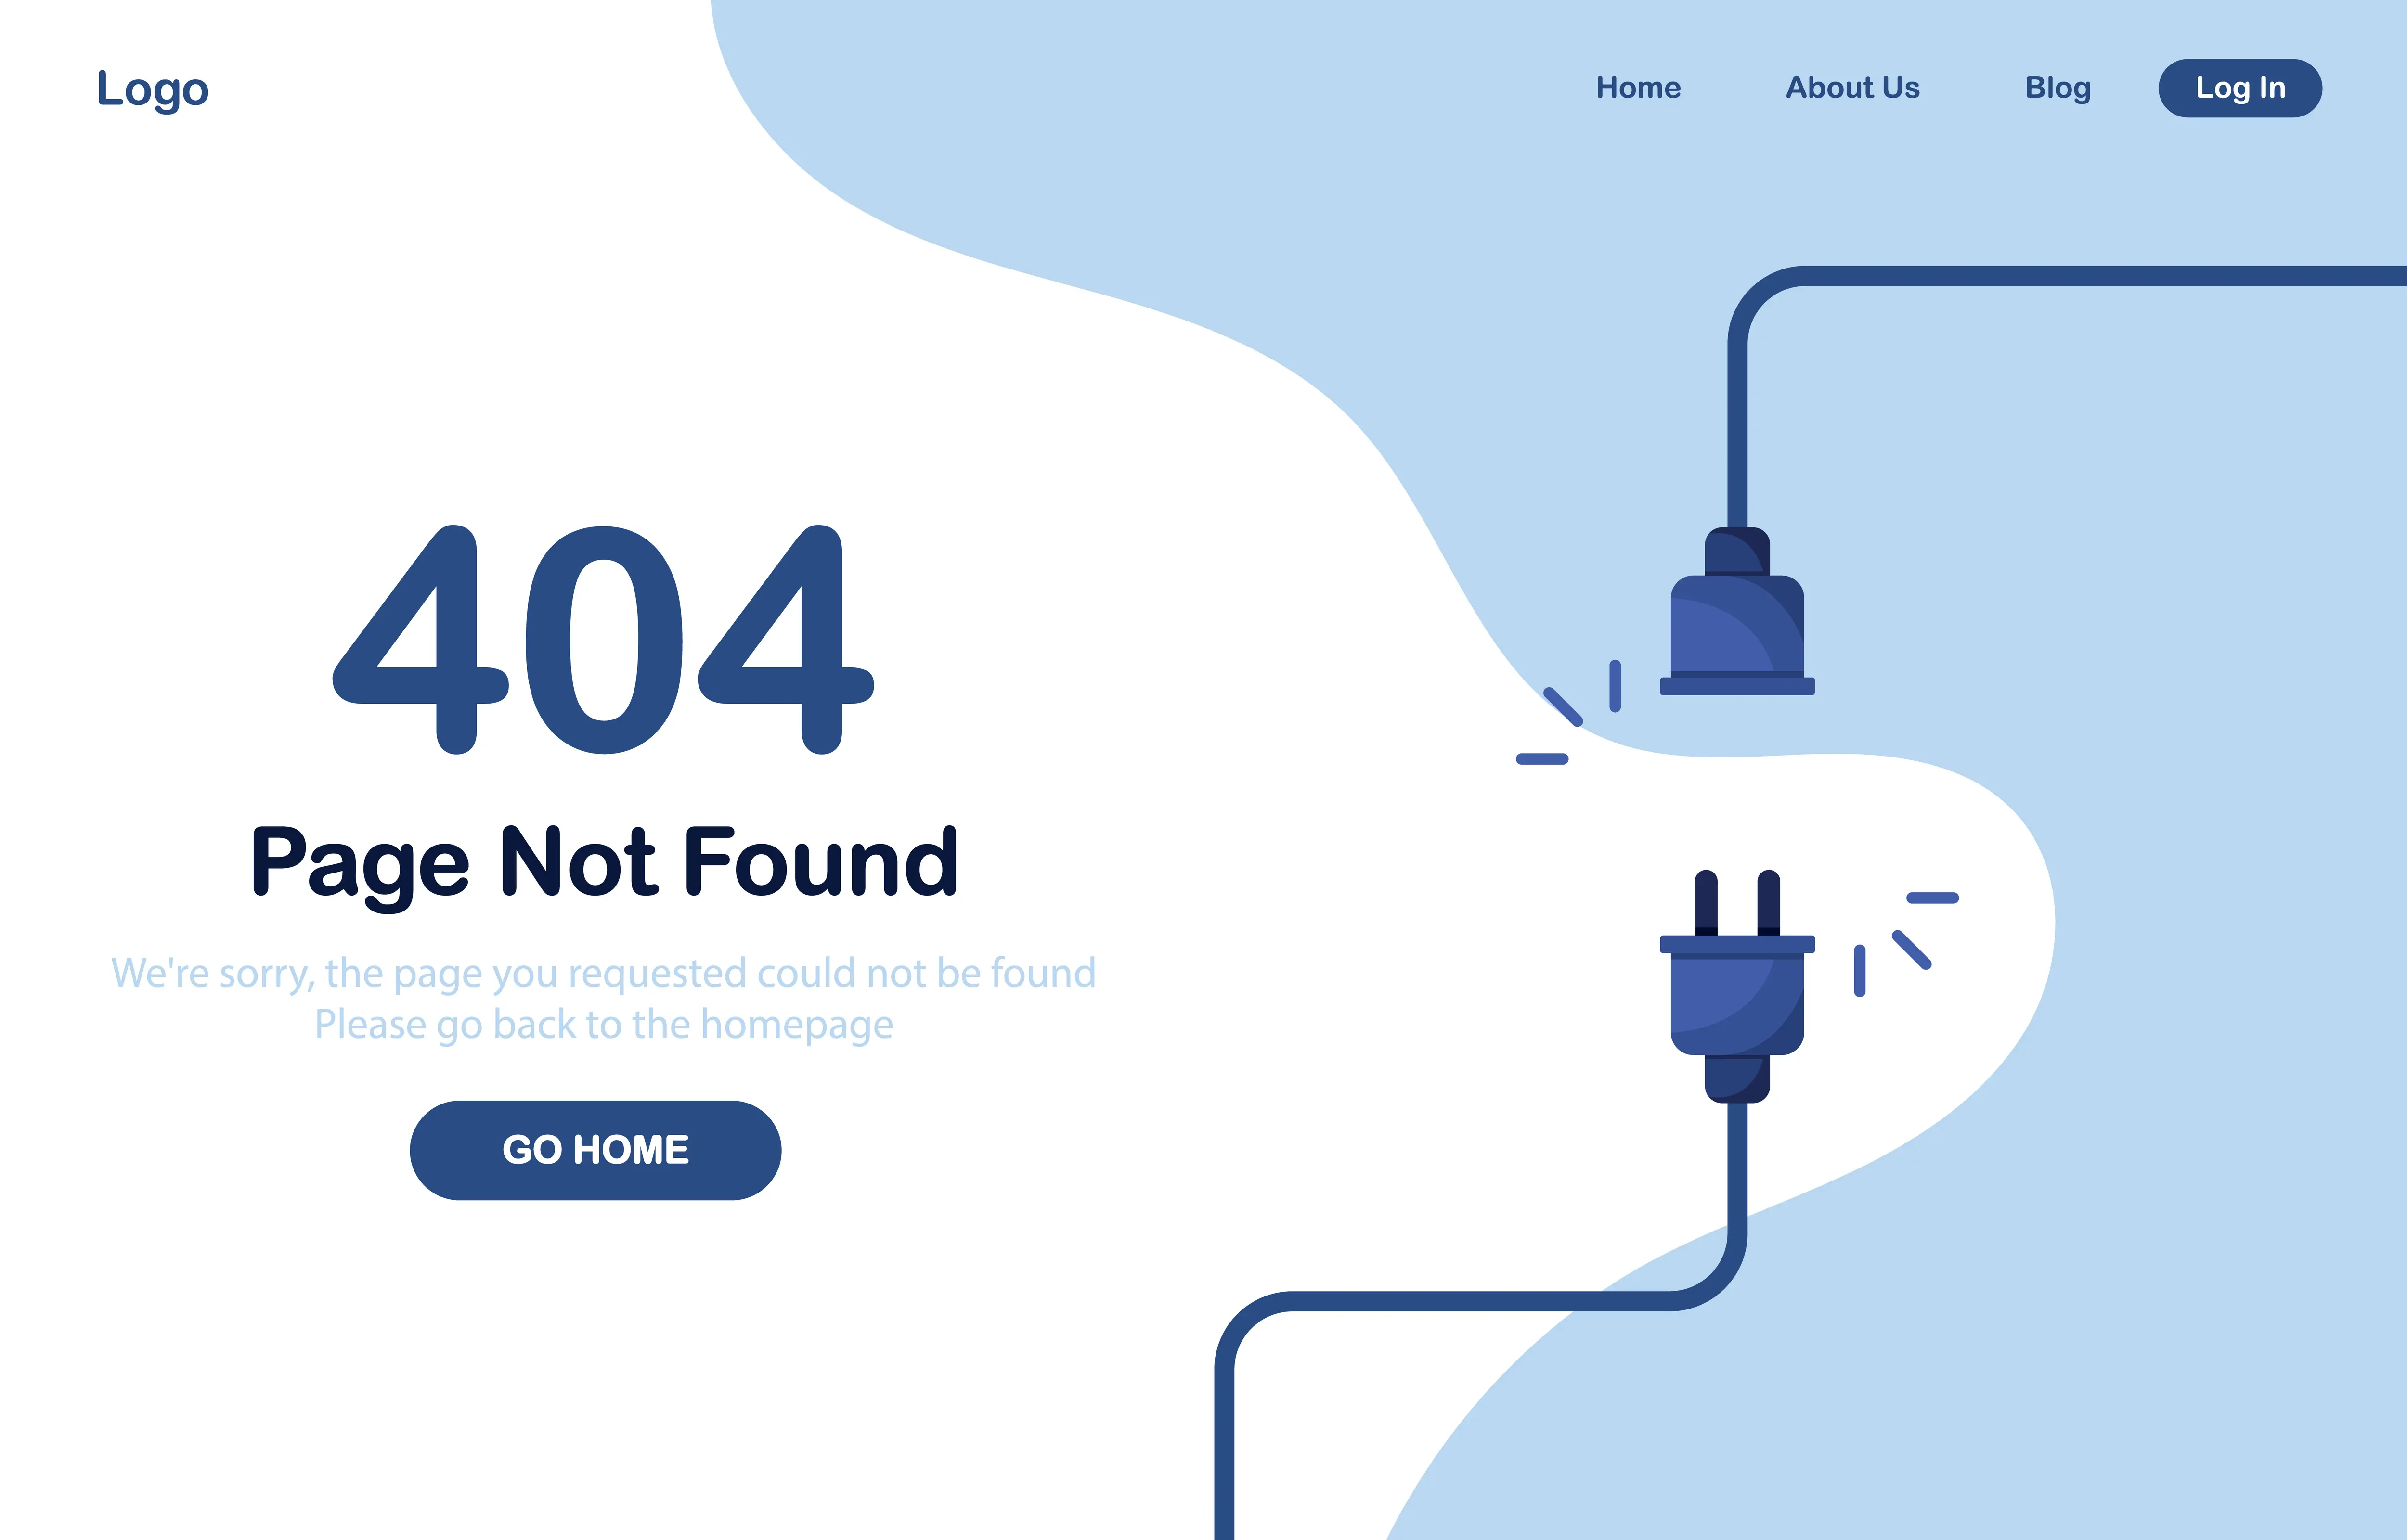 web hosting terminology 404 page